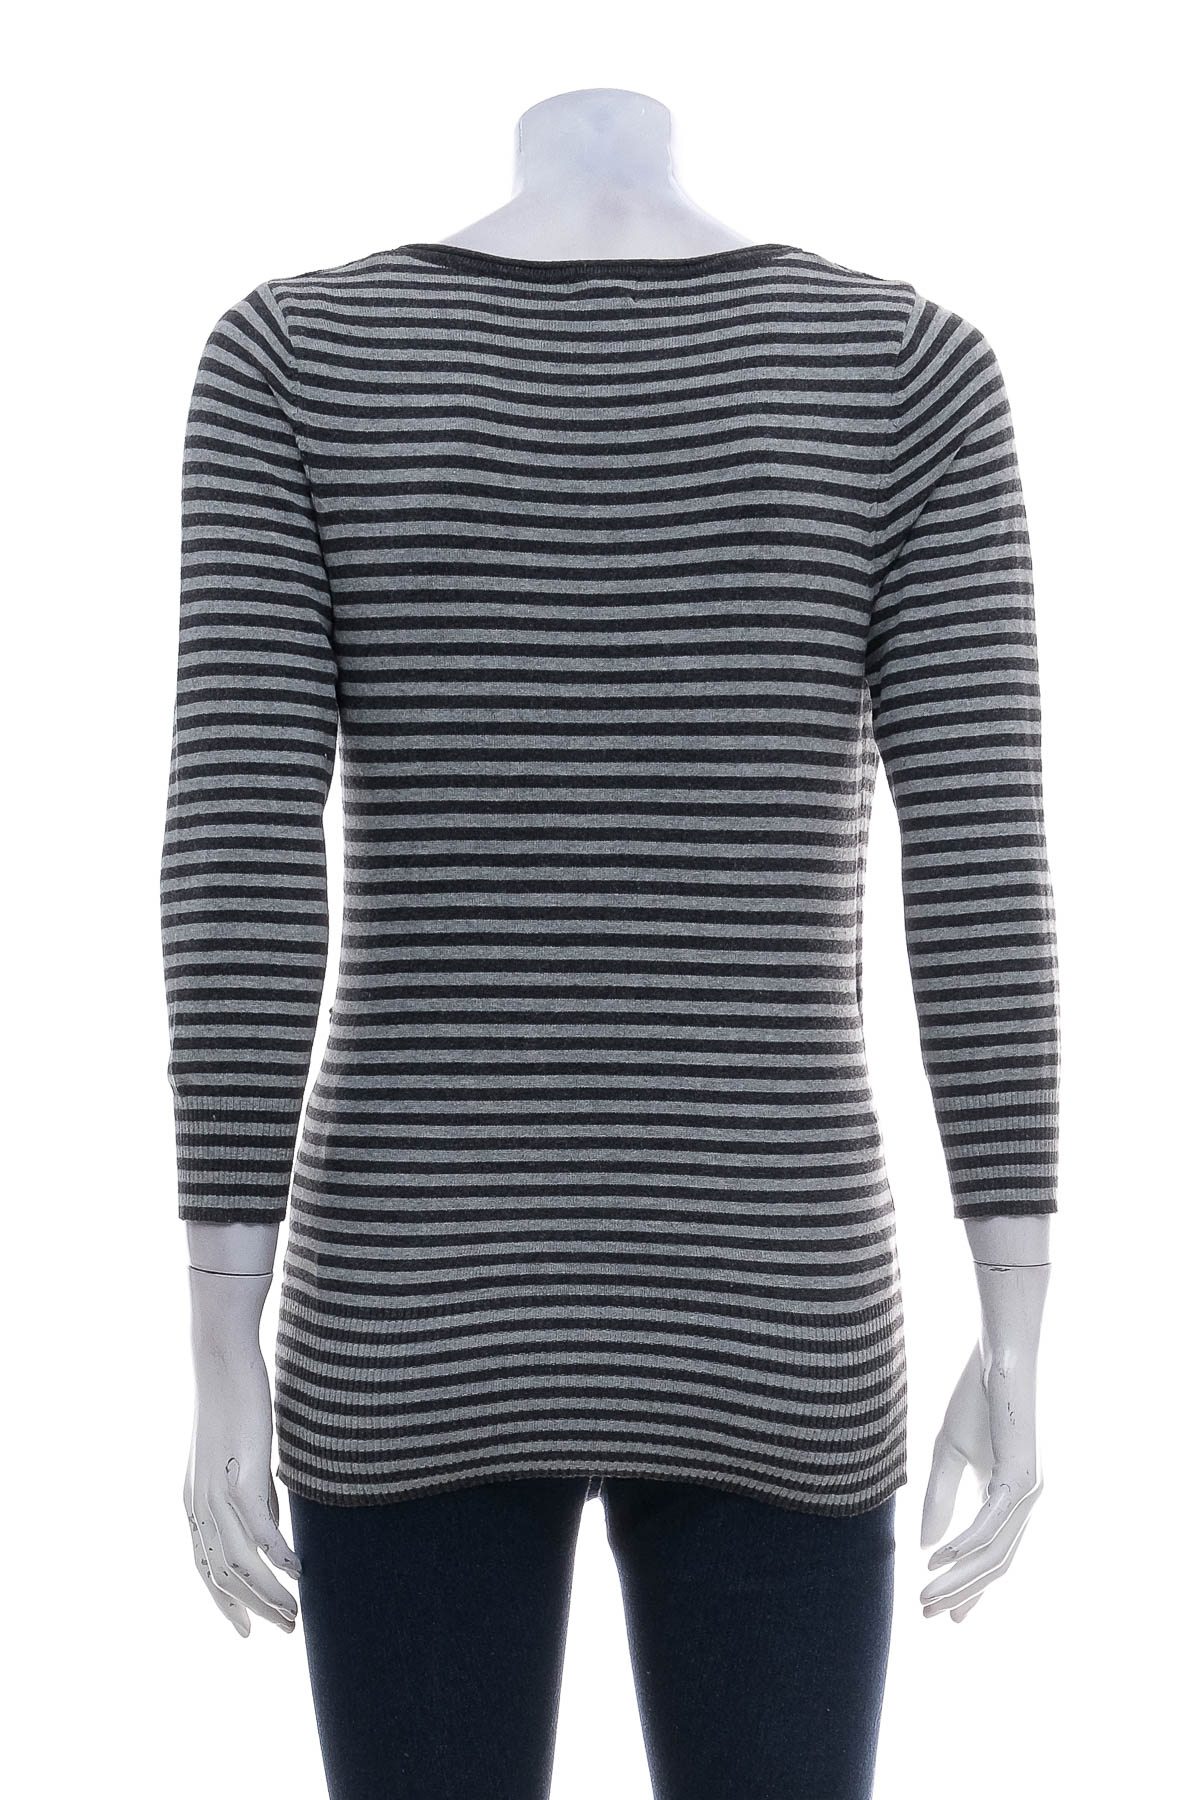 Women's sweater - LINDEX - 1